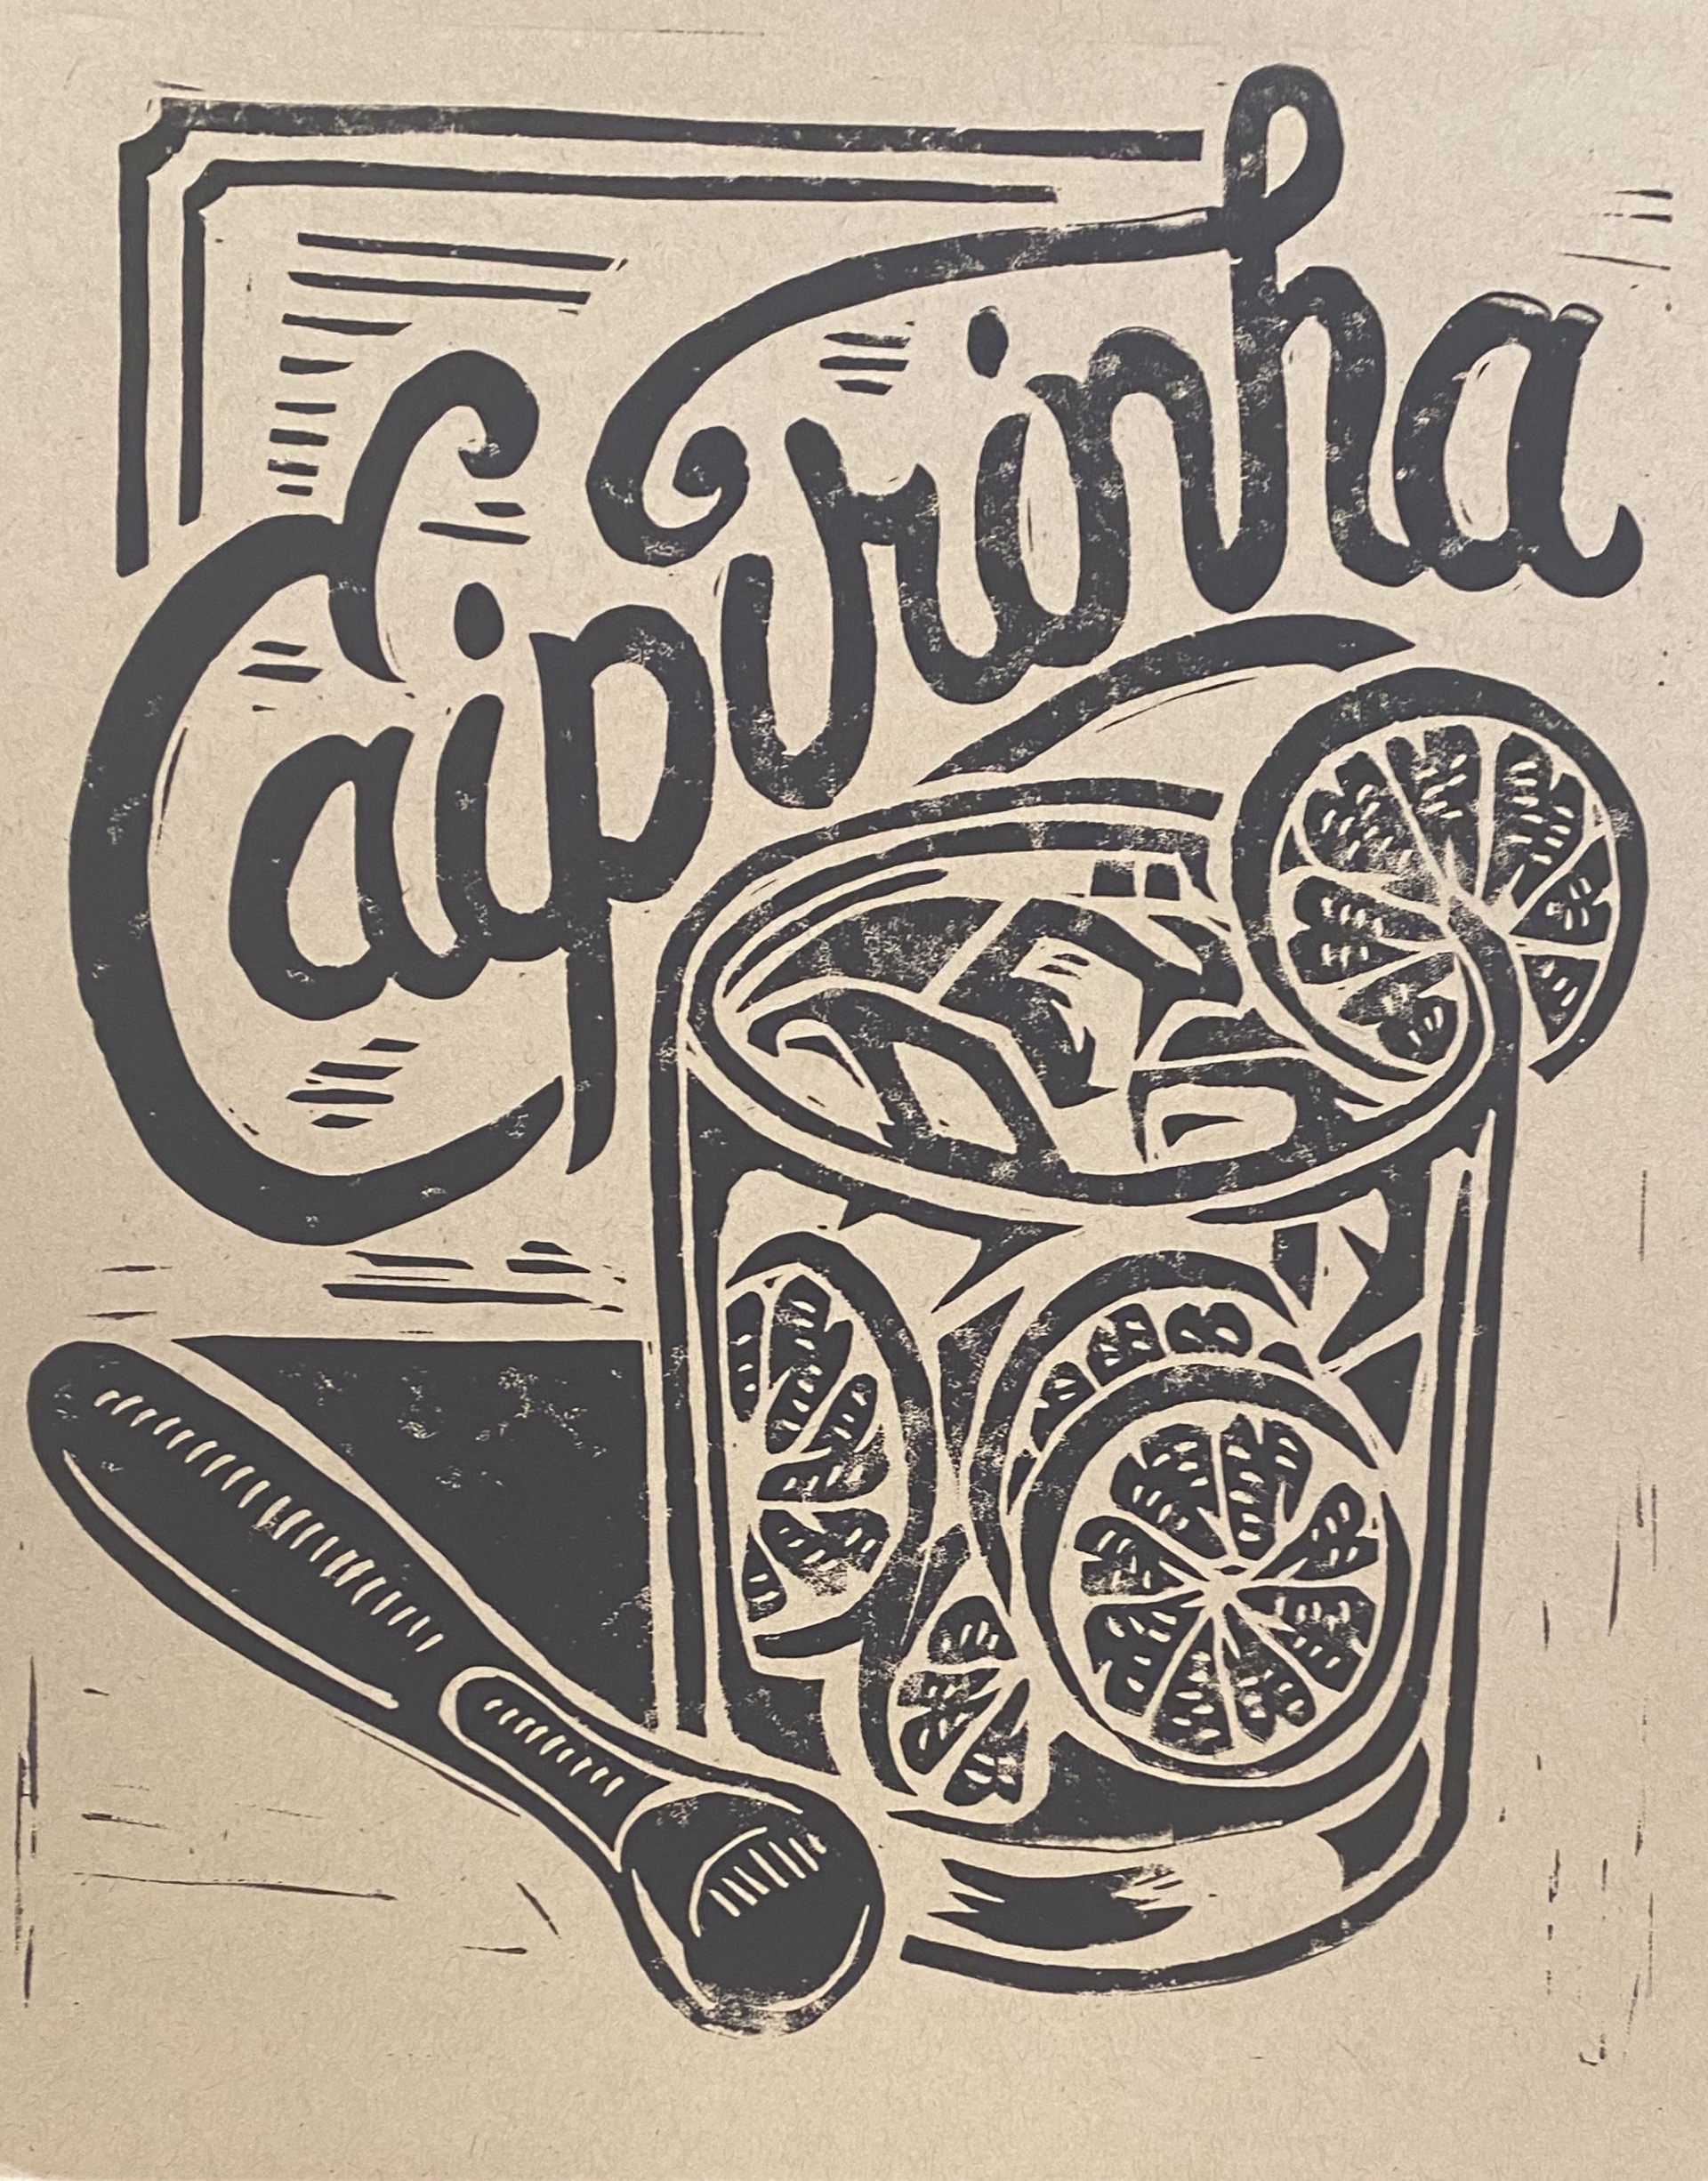 Caipirinha by Derrick Castle